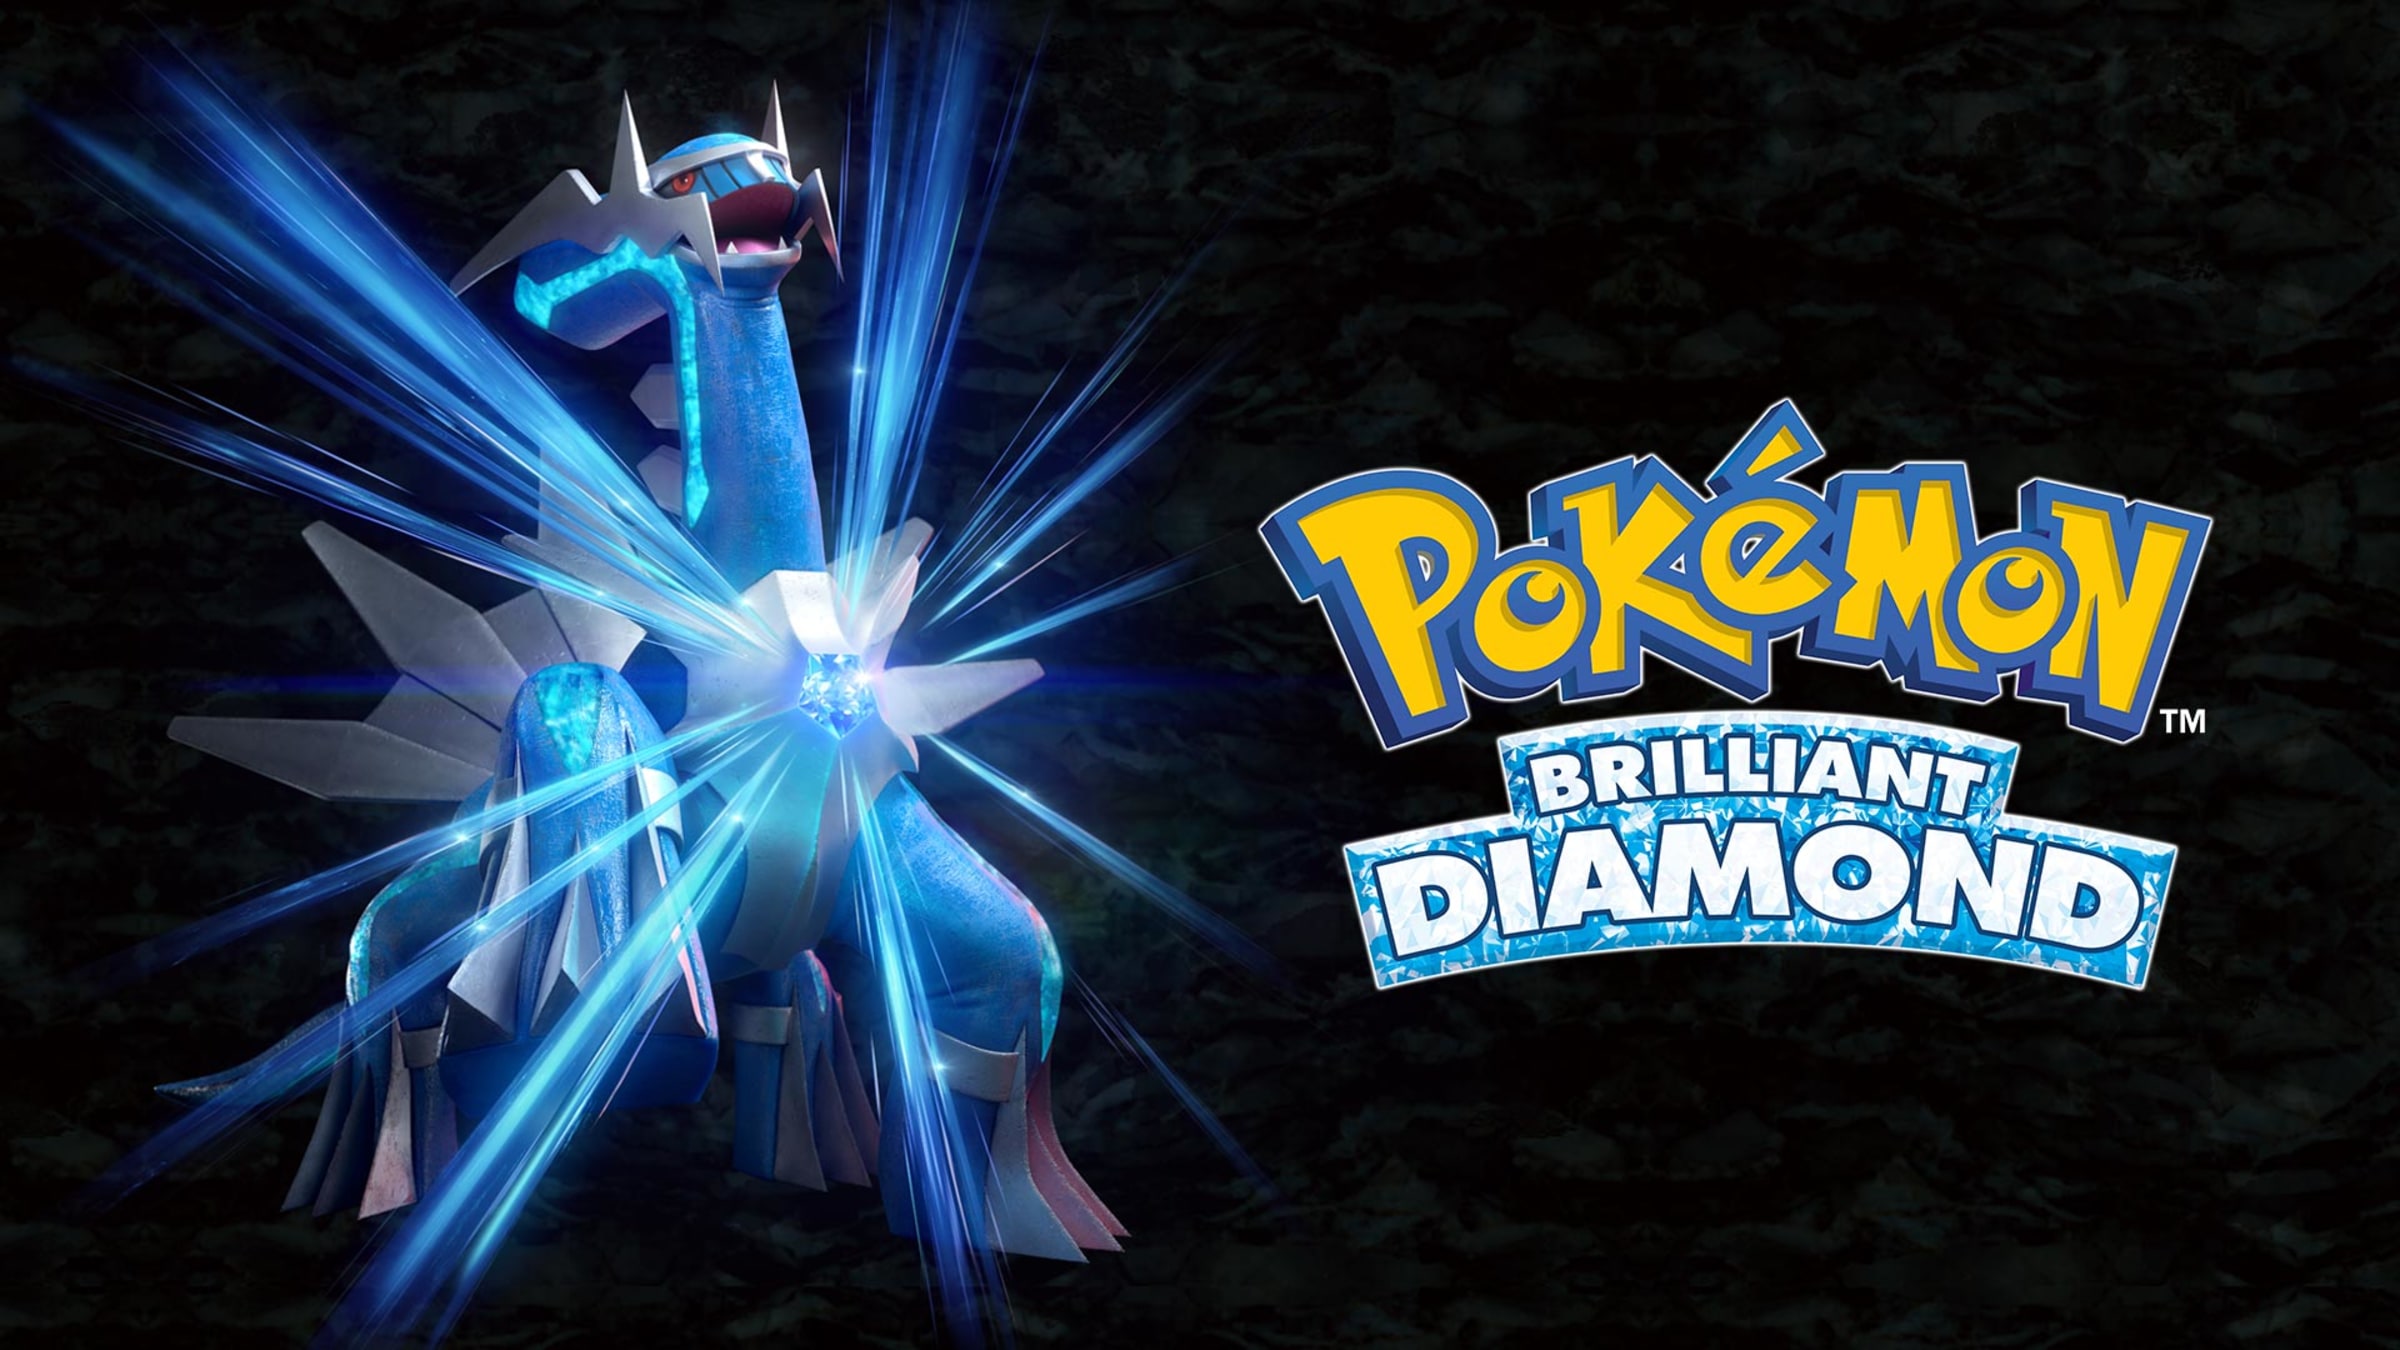 Video Games on X: Pre-Order Pokémon™ Brilliant Diamond